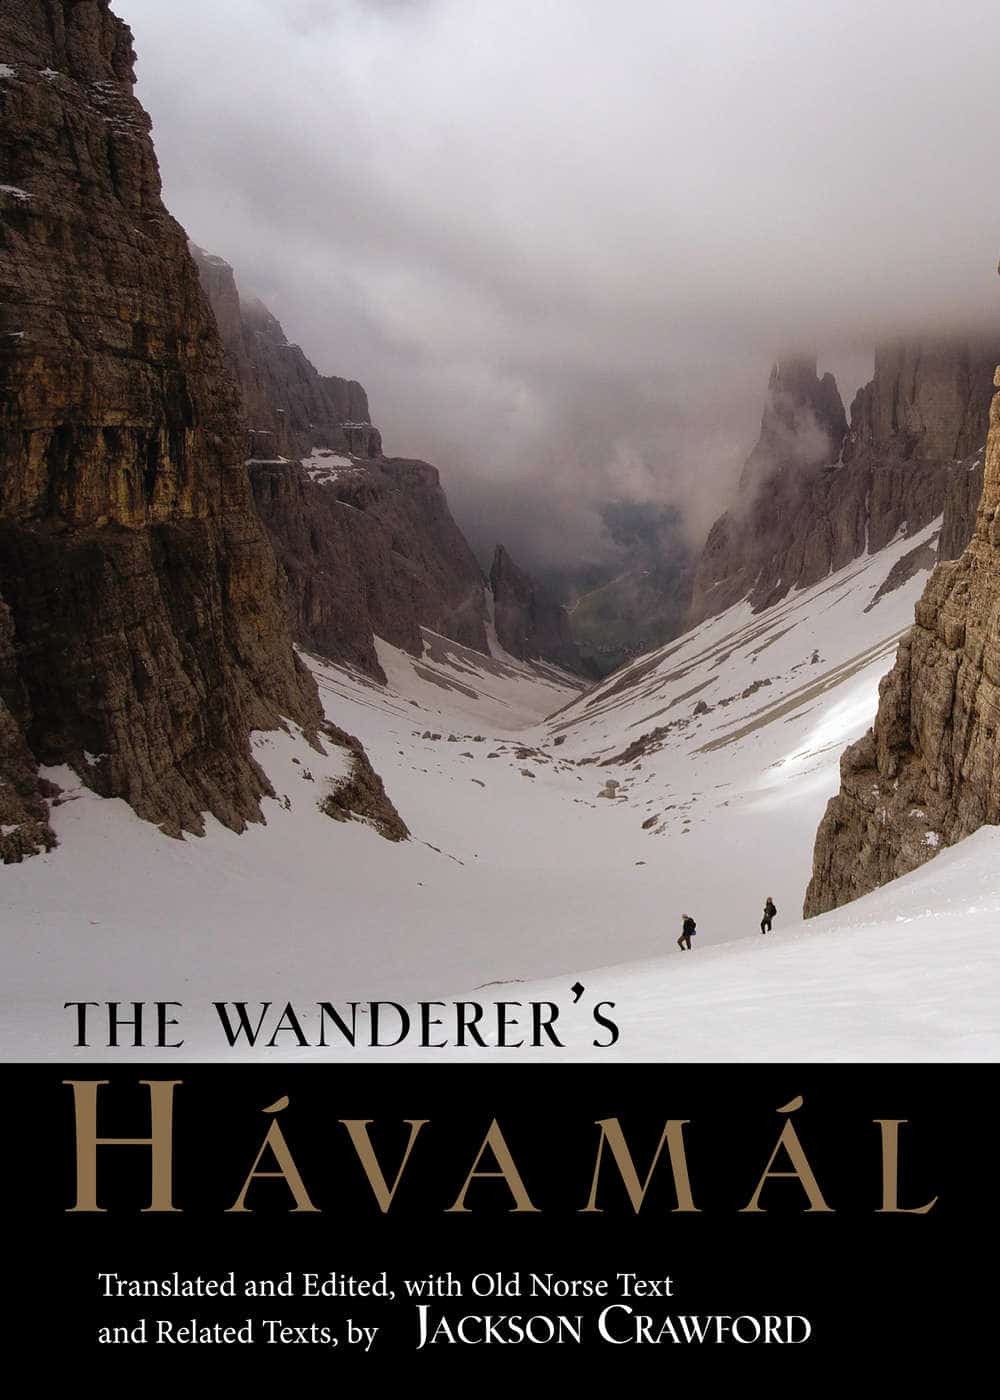 The Wanderer’s Havamal – Translated by Jackson Crawford